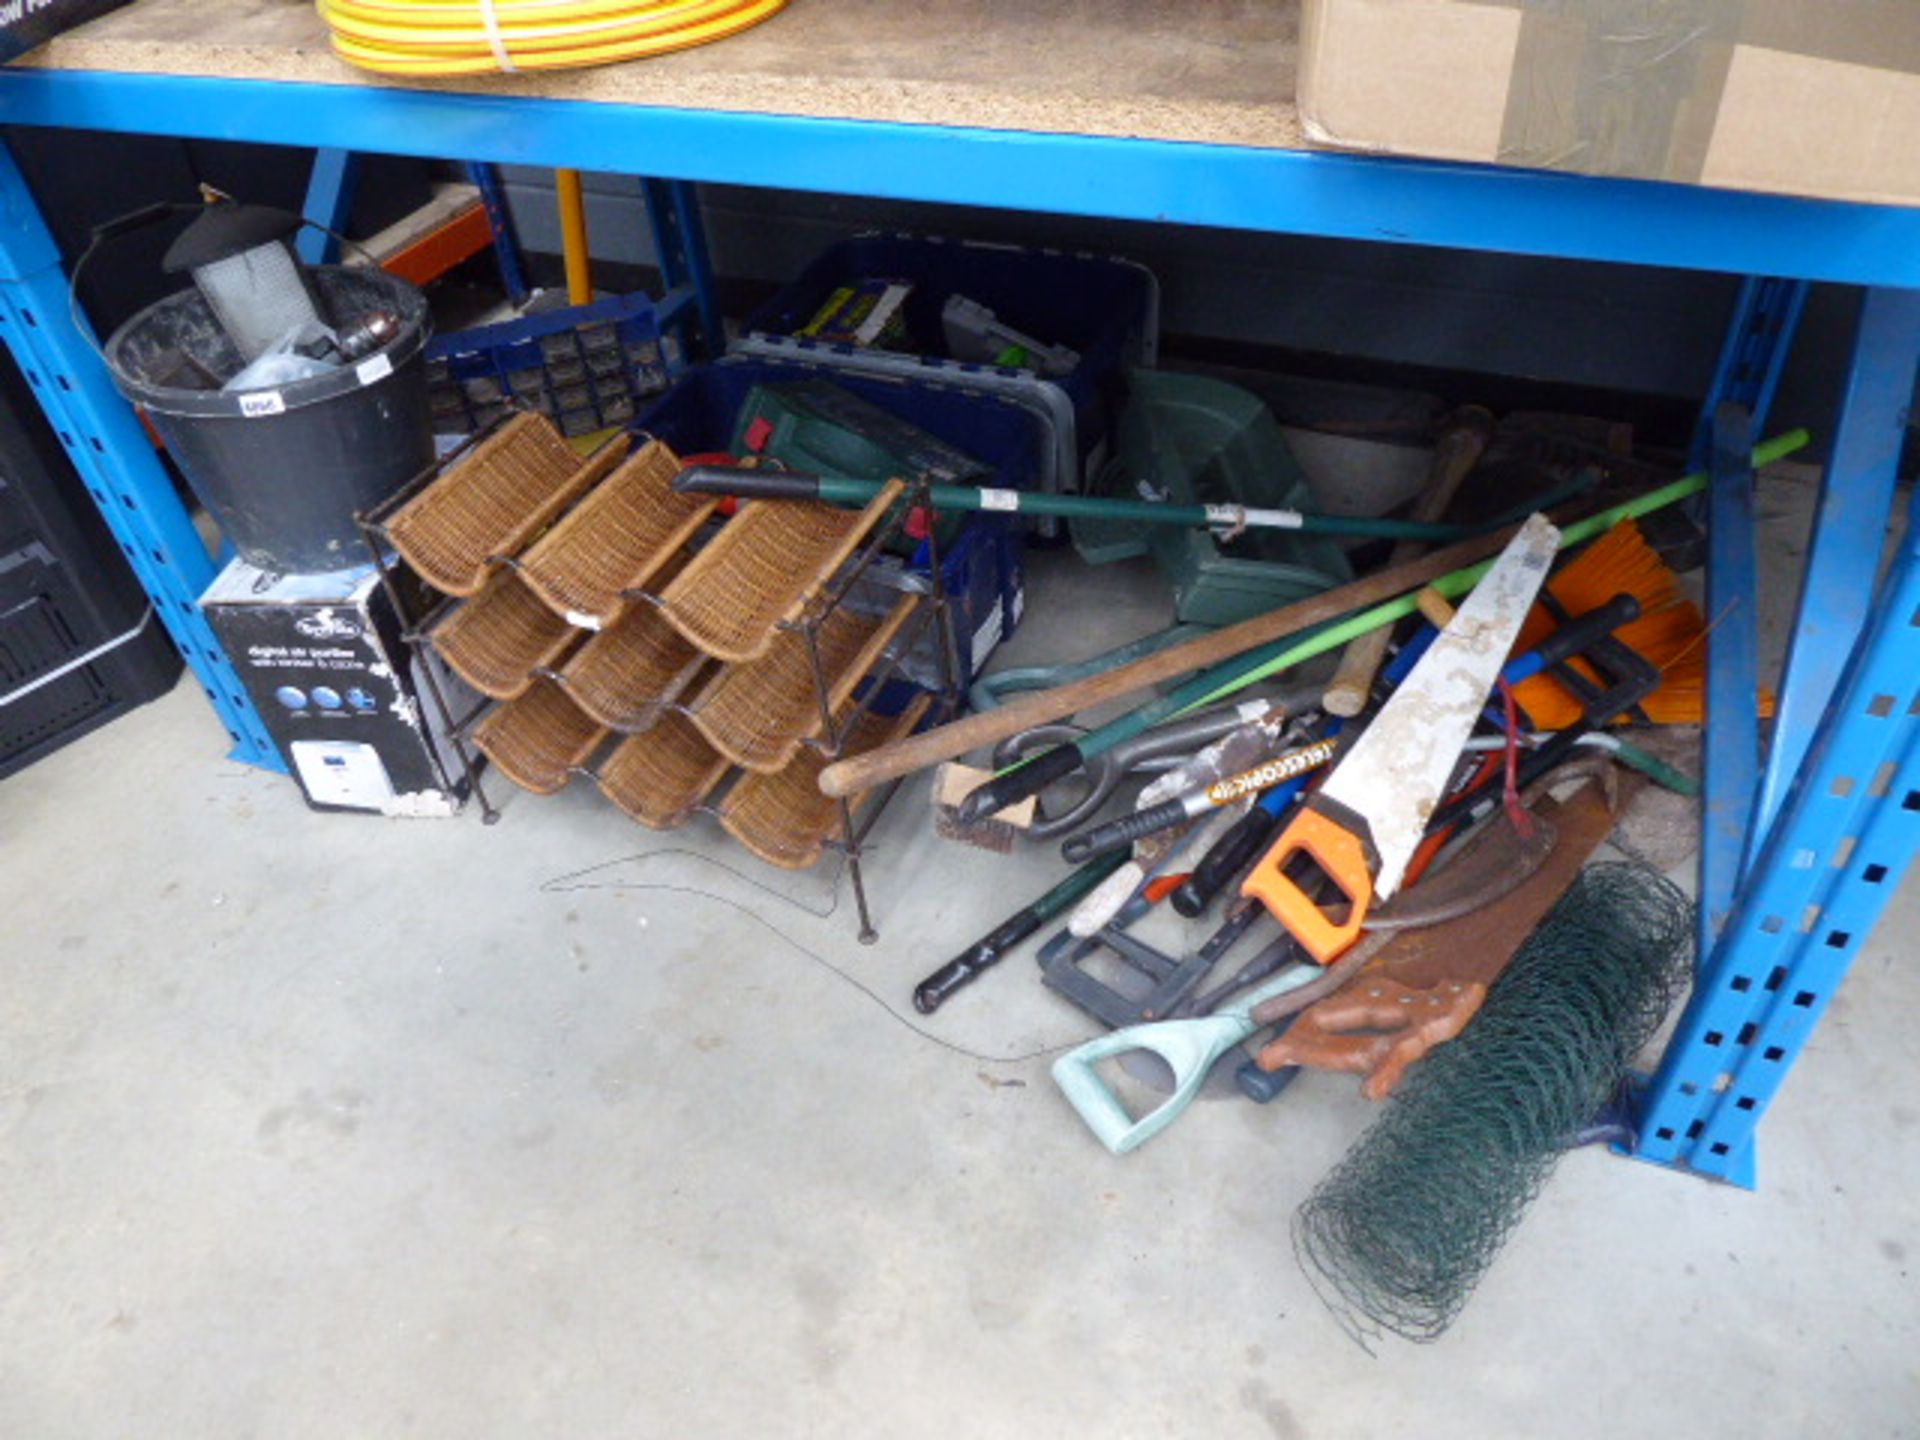 Large under bay of assorted tools, screws, fixings, saws, wine rack, air purifier etc